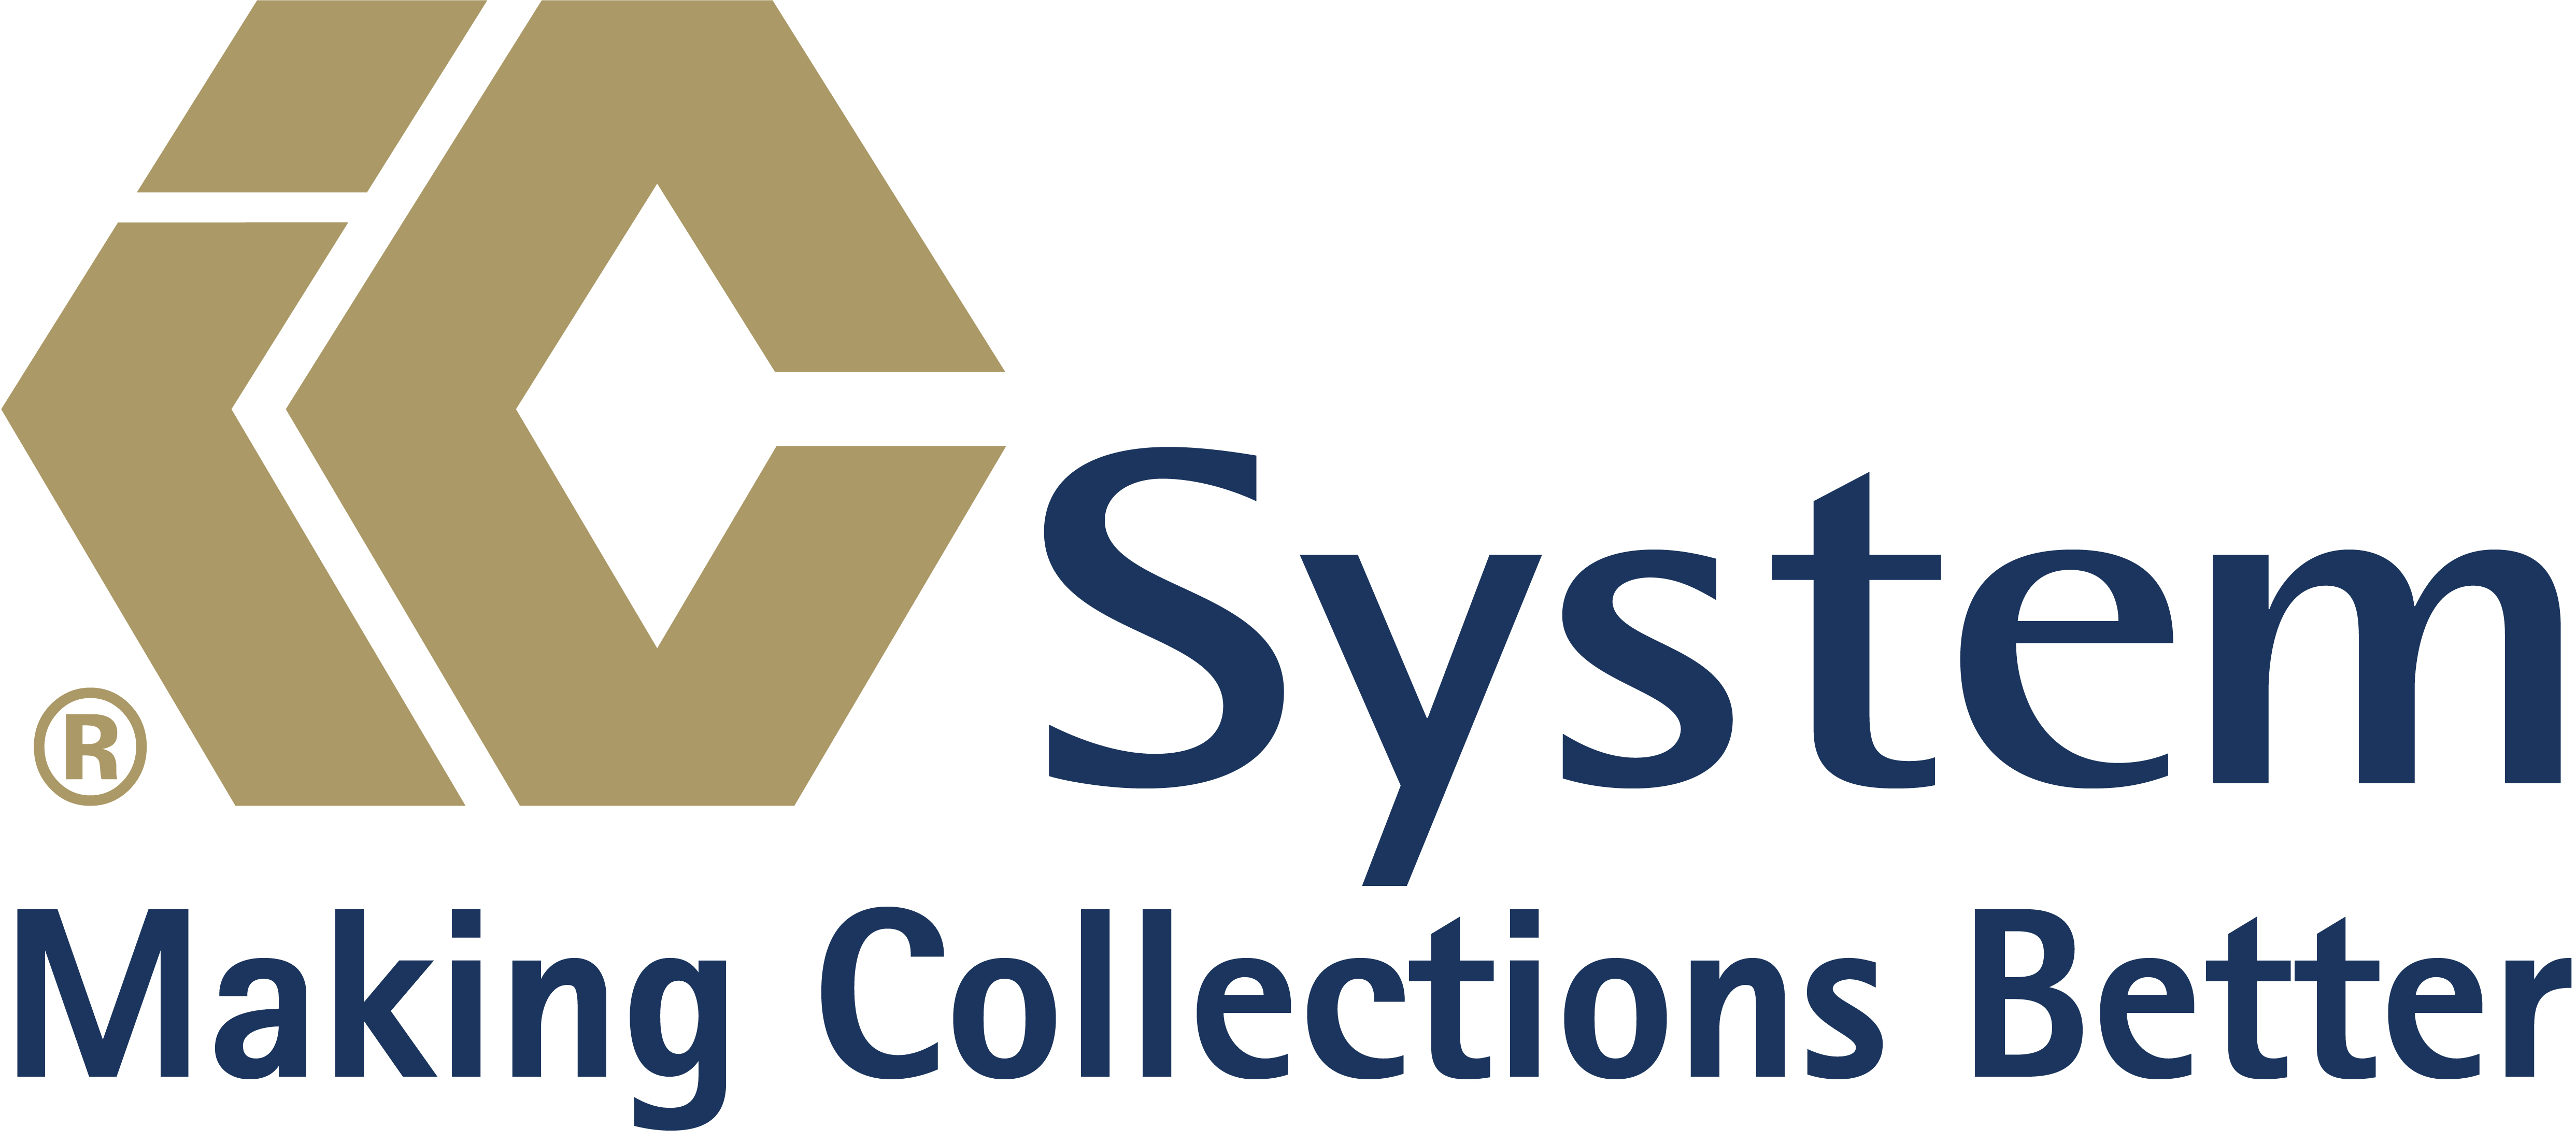 IC System logo